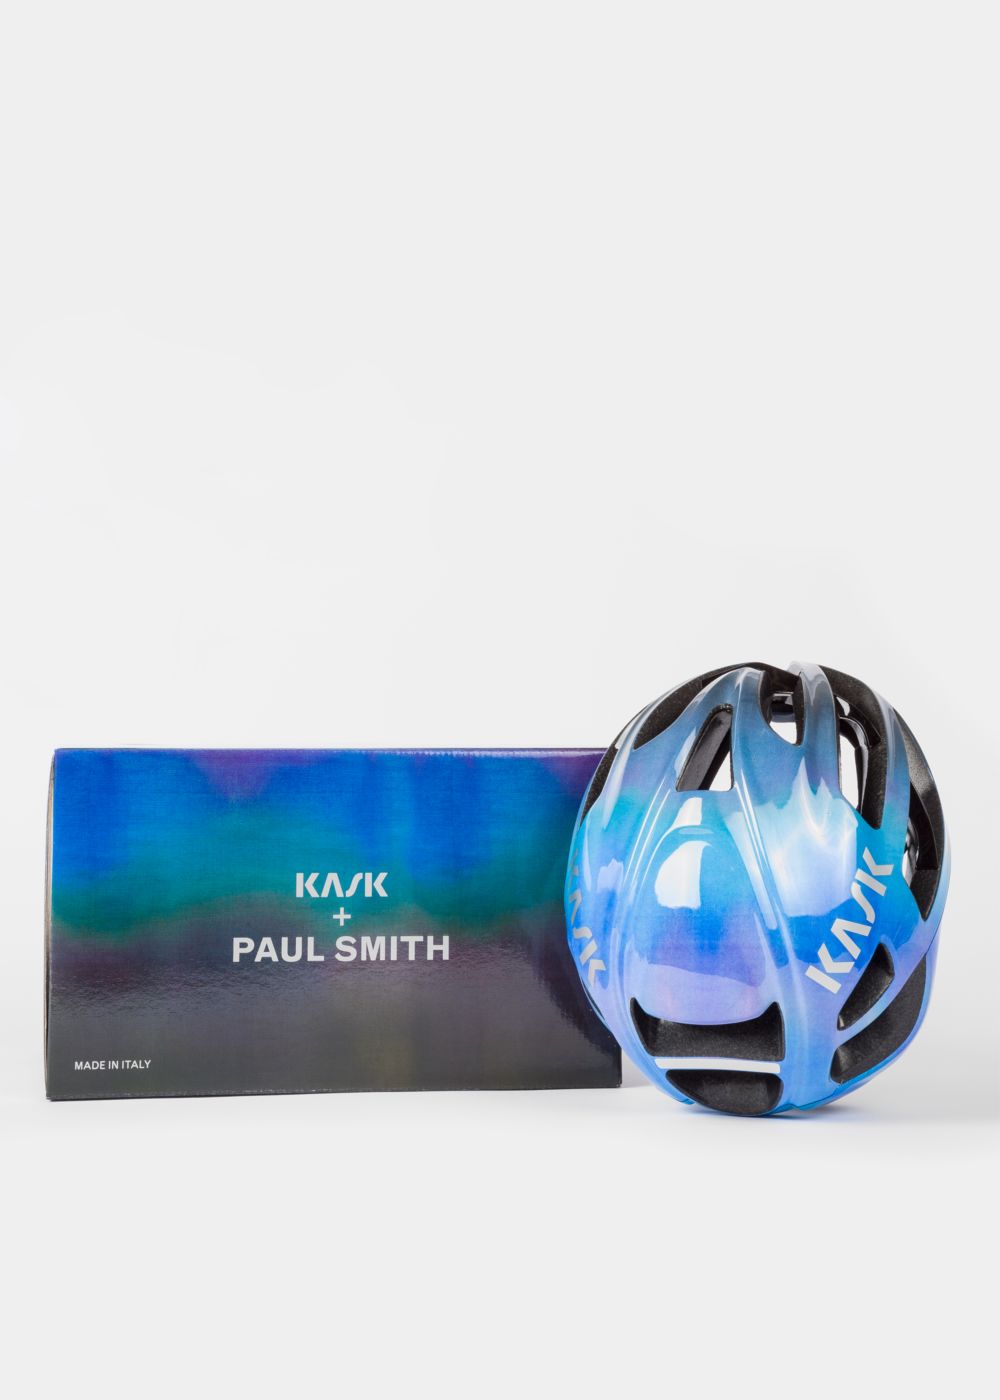 Paul Smith + Kask Protone Cycling Helmet - fhtn529.com